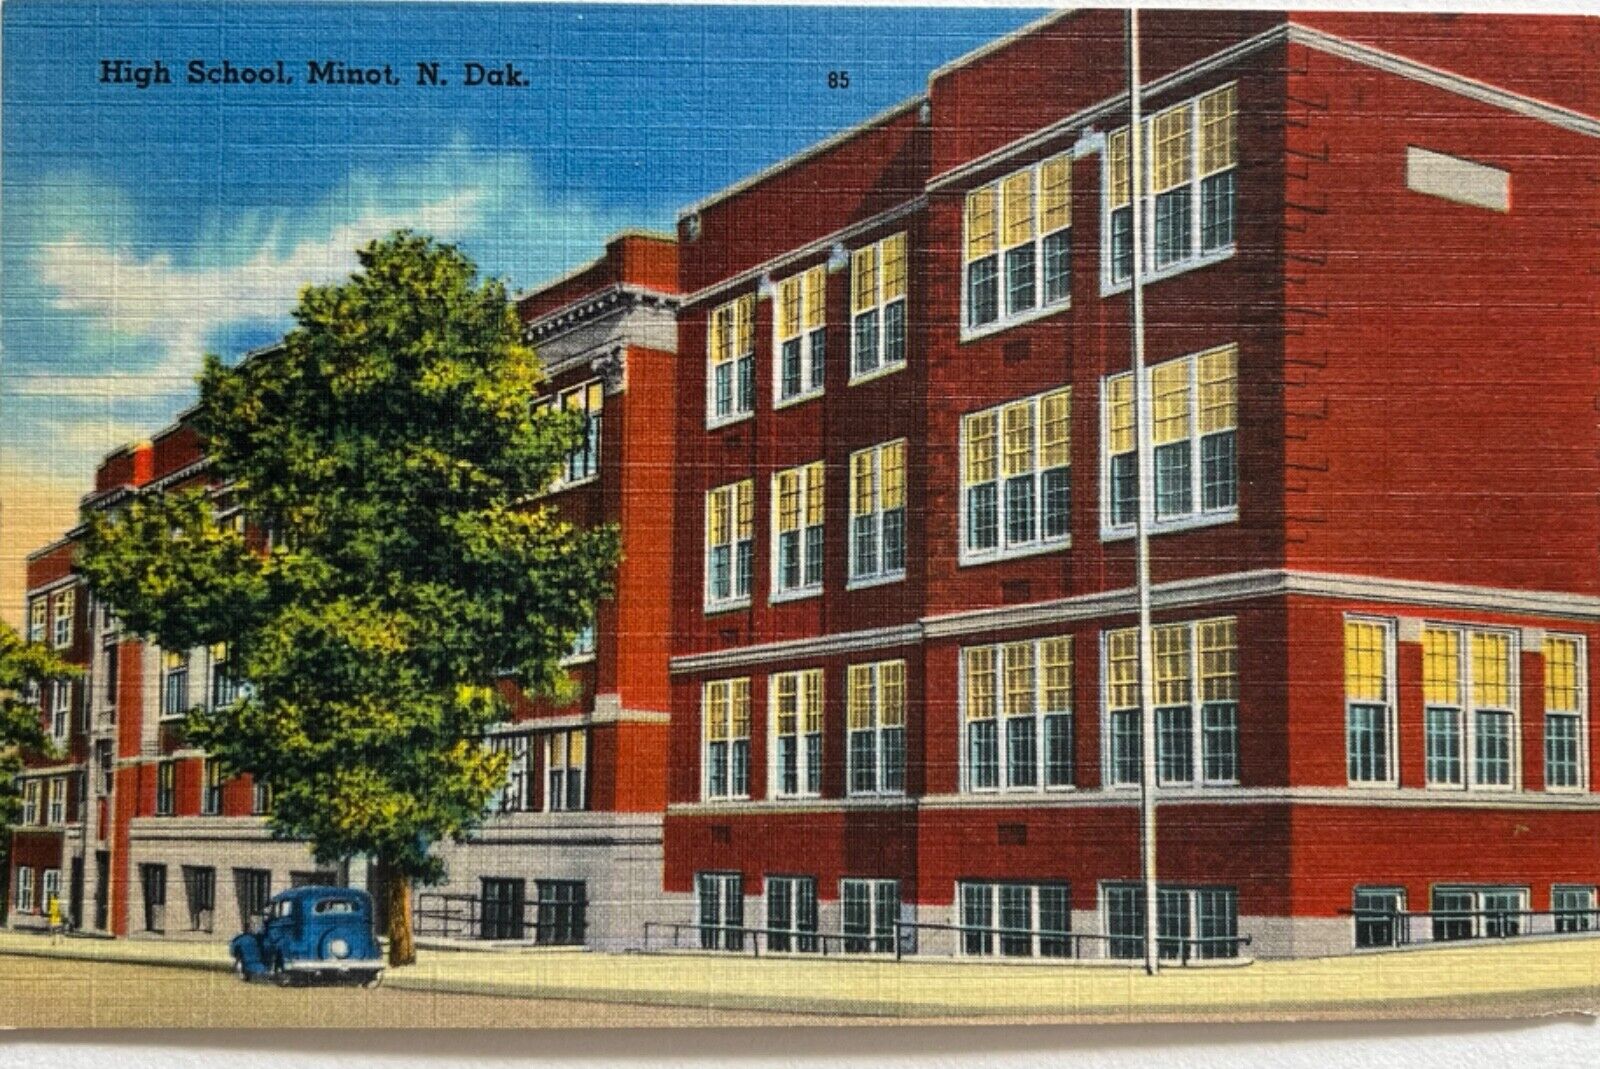 Minot North Dakota High School Postcard c1940